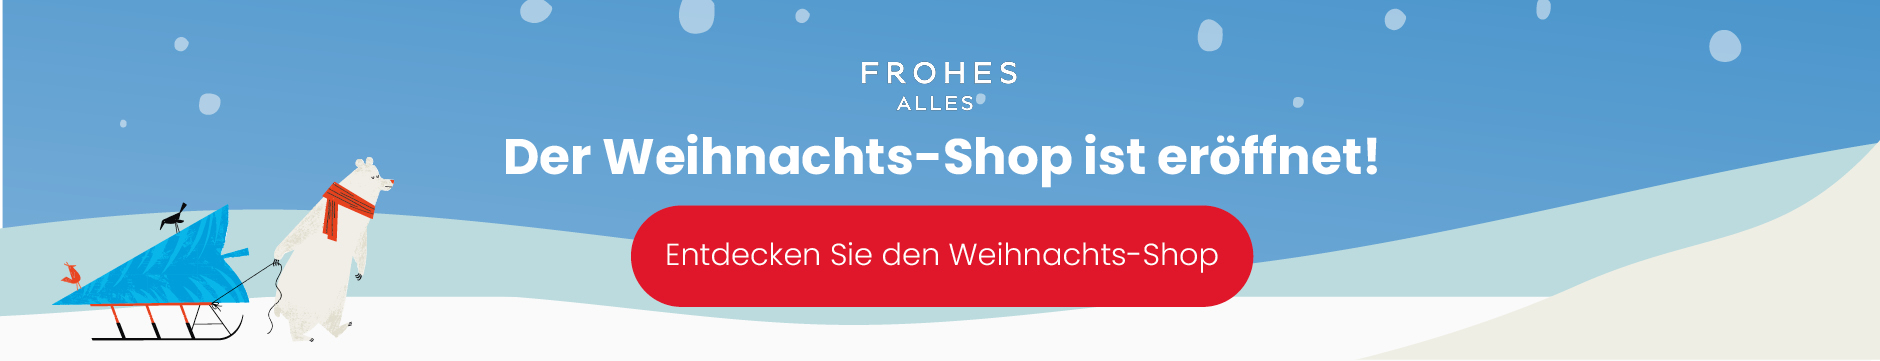 Christmas Shop is Open HP Banner-German